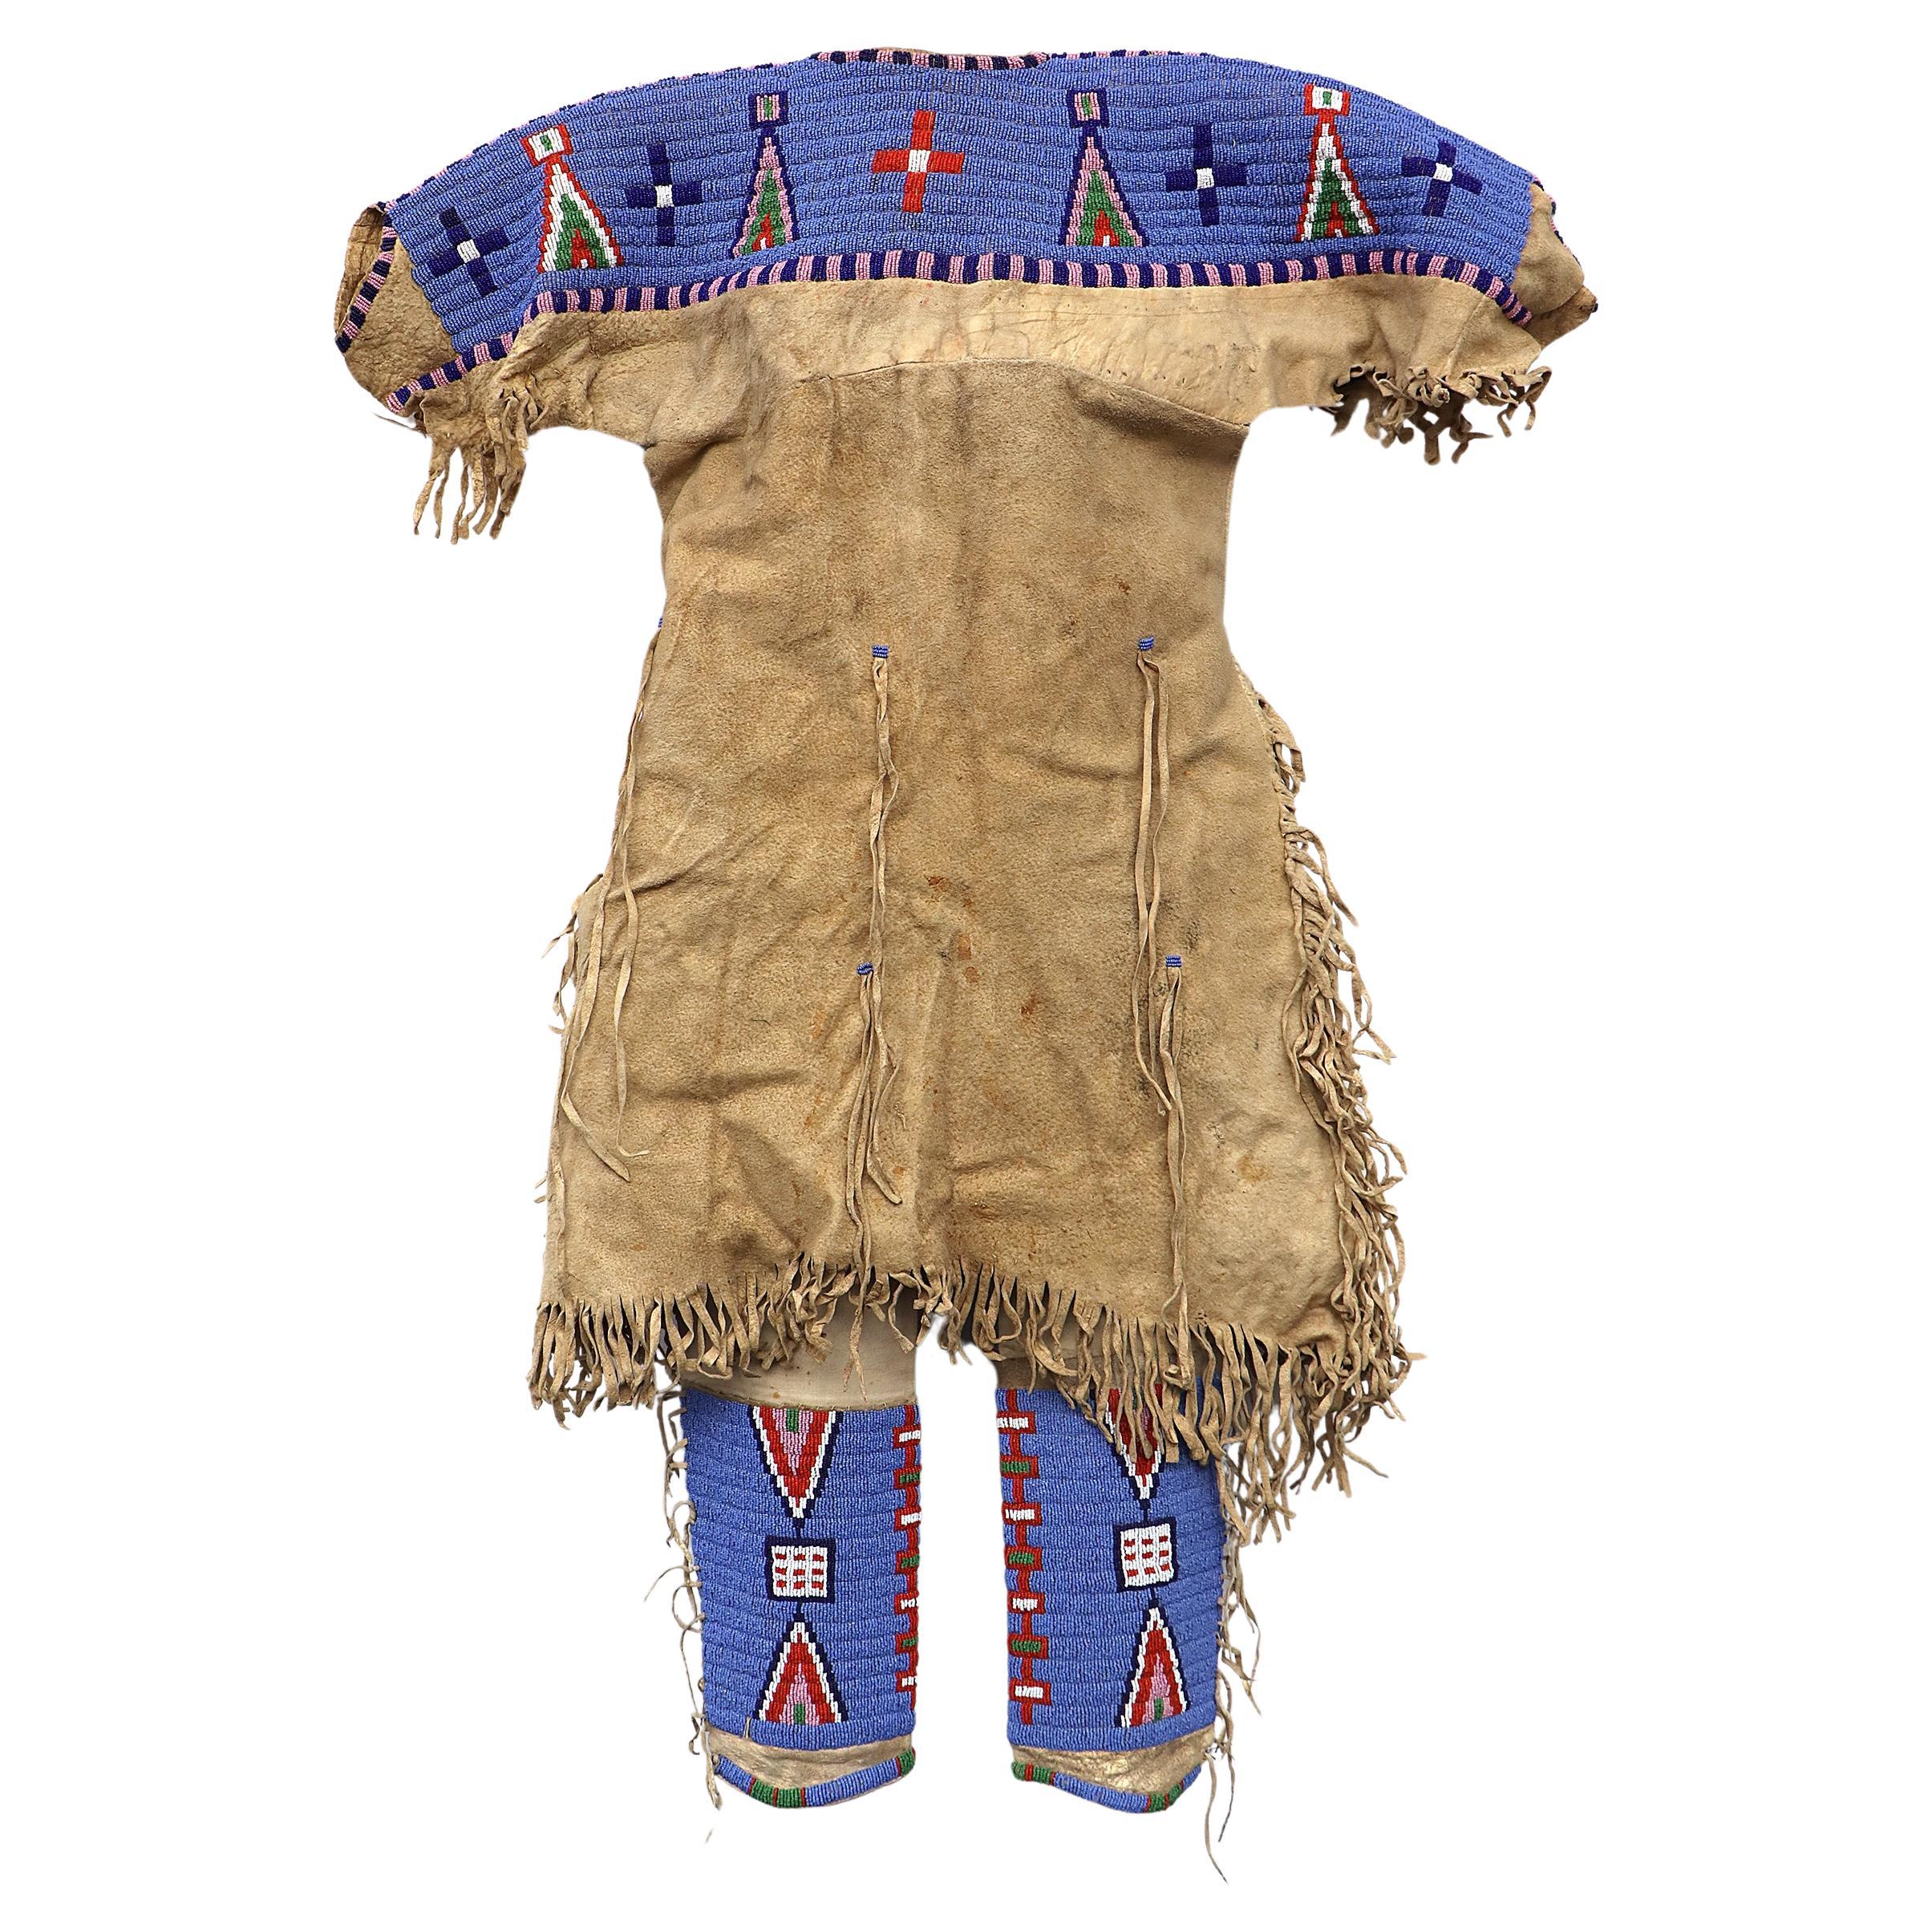 Antique Beaded Child's Dress & Leggings, Sioux (Plains Indian) circa 1900, blue For Sale